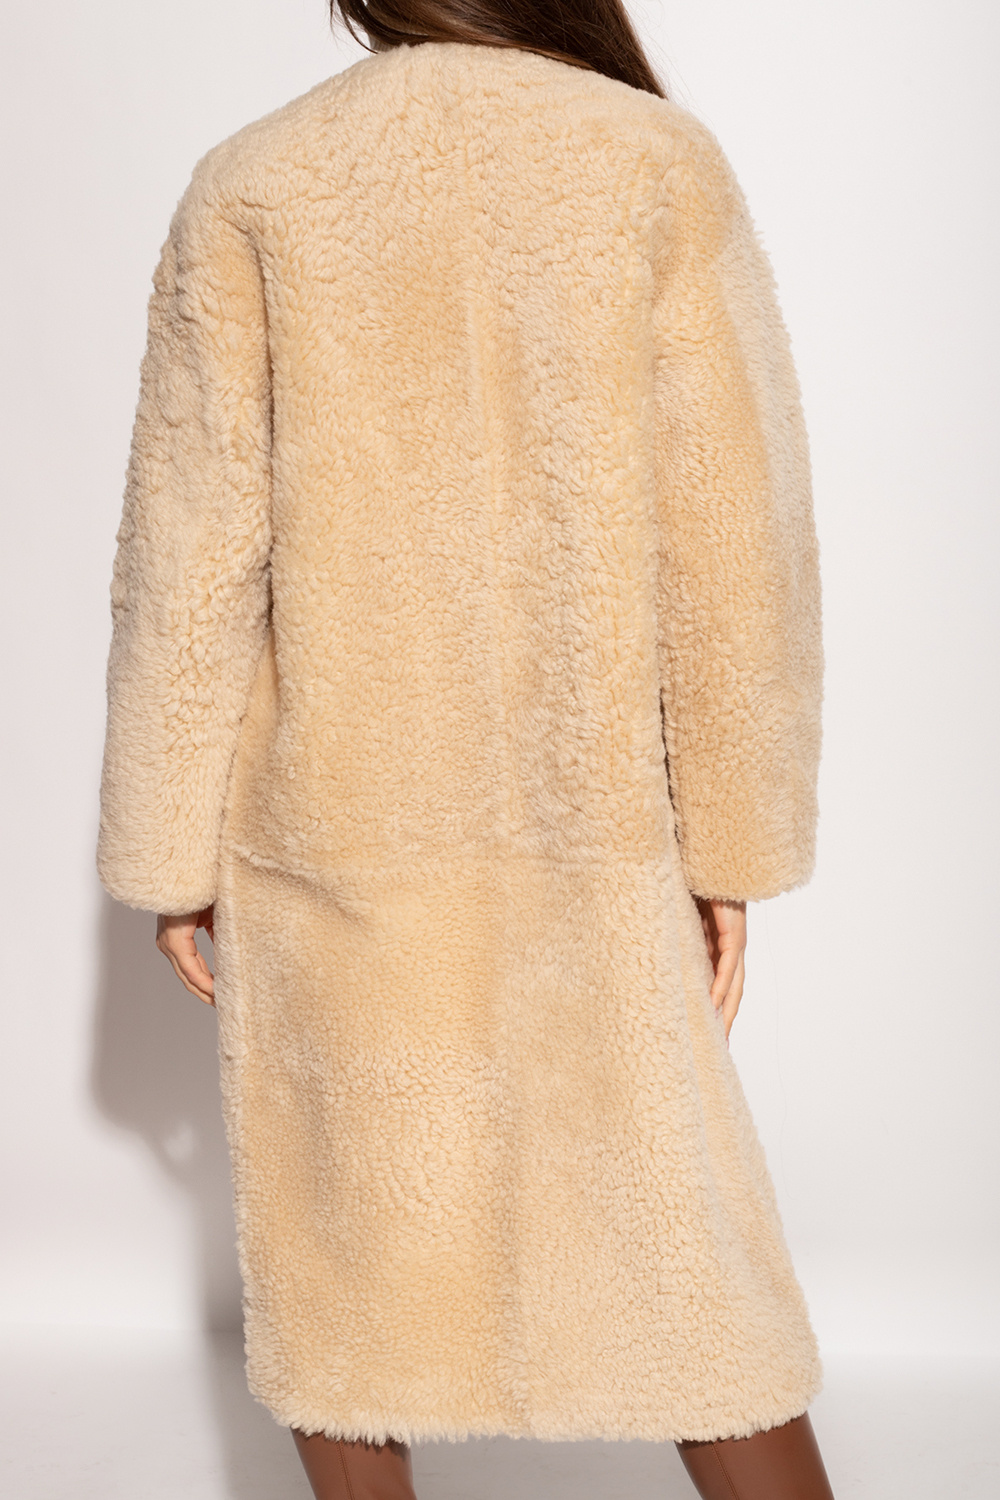 SEE BY Chloé sheep coat.